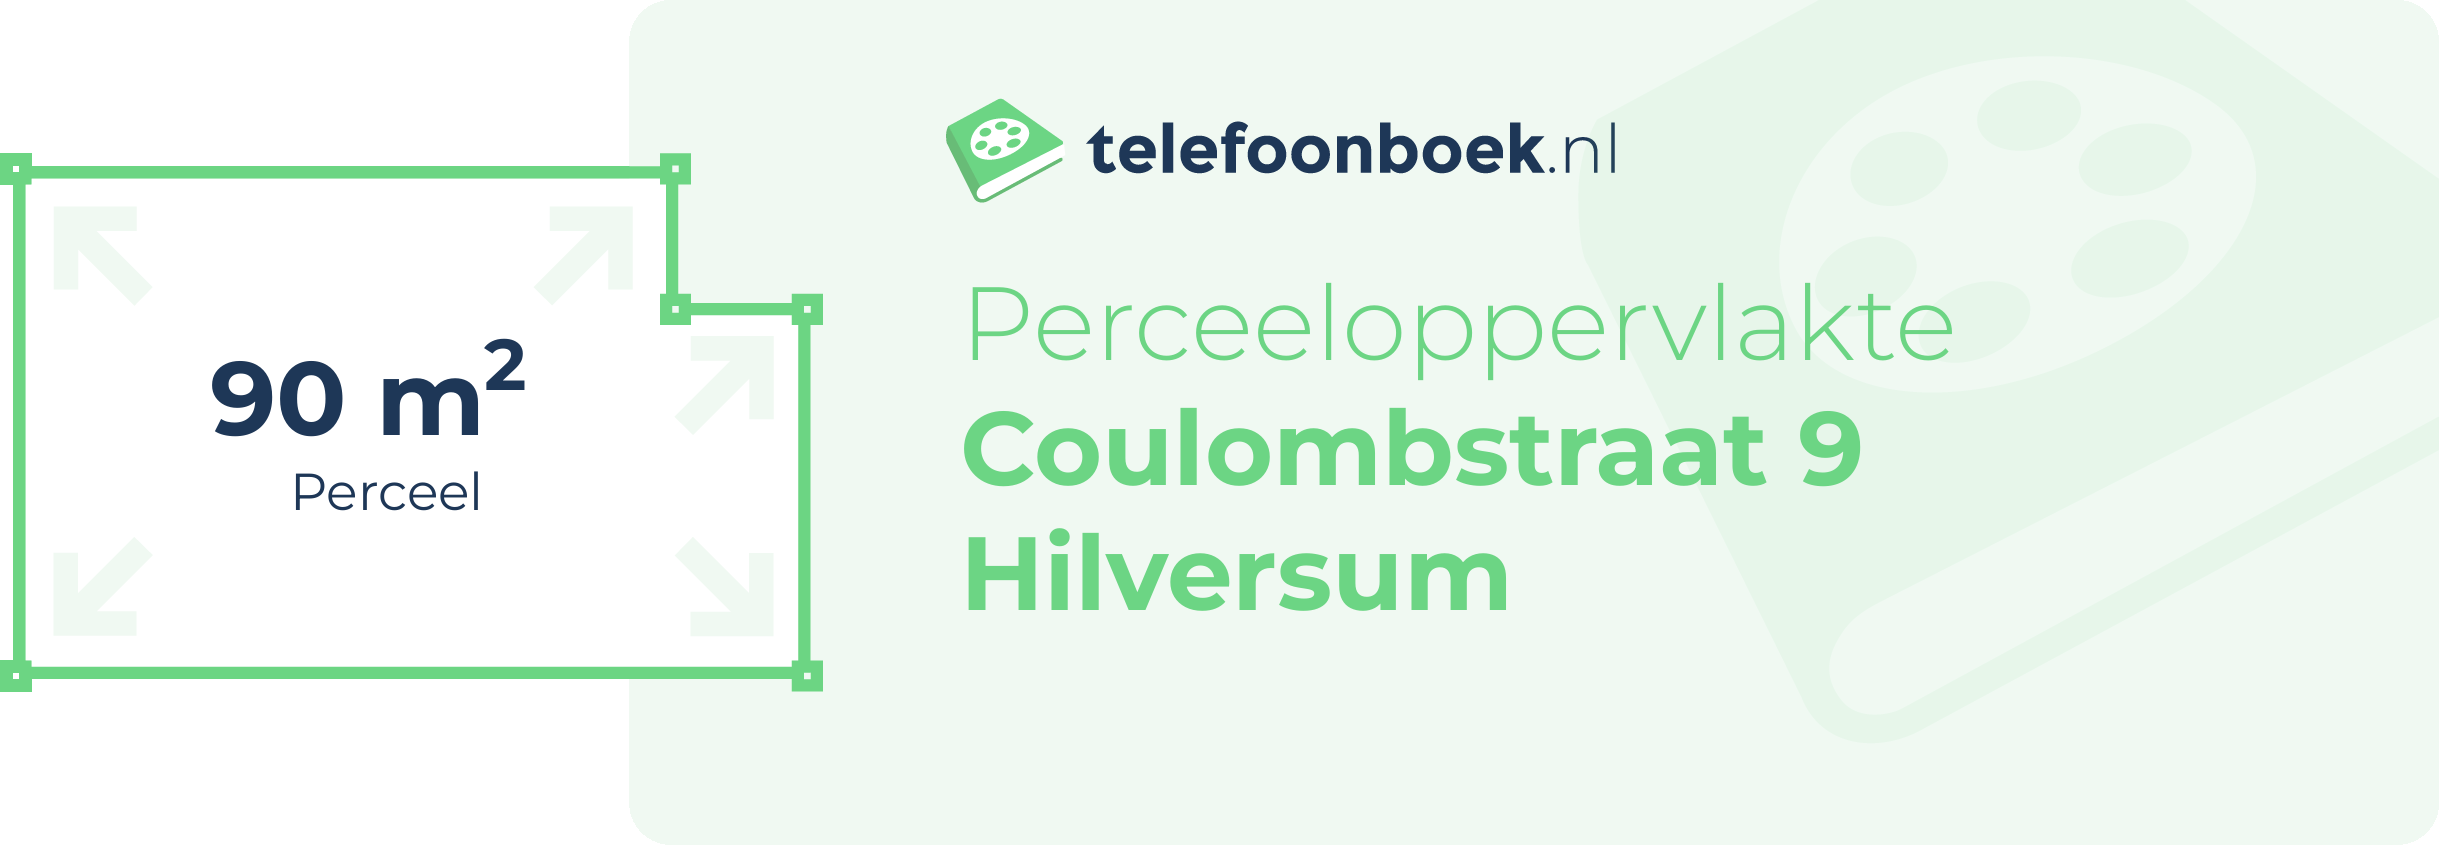 Perceeloppervlakte Coulombstraat 9 Hilversum